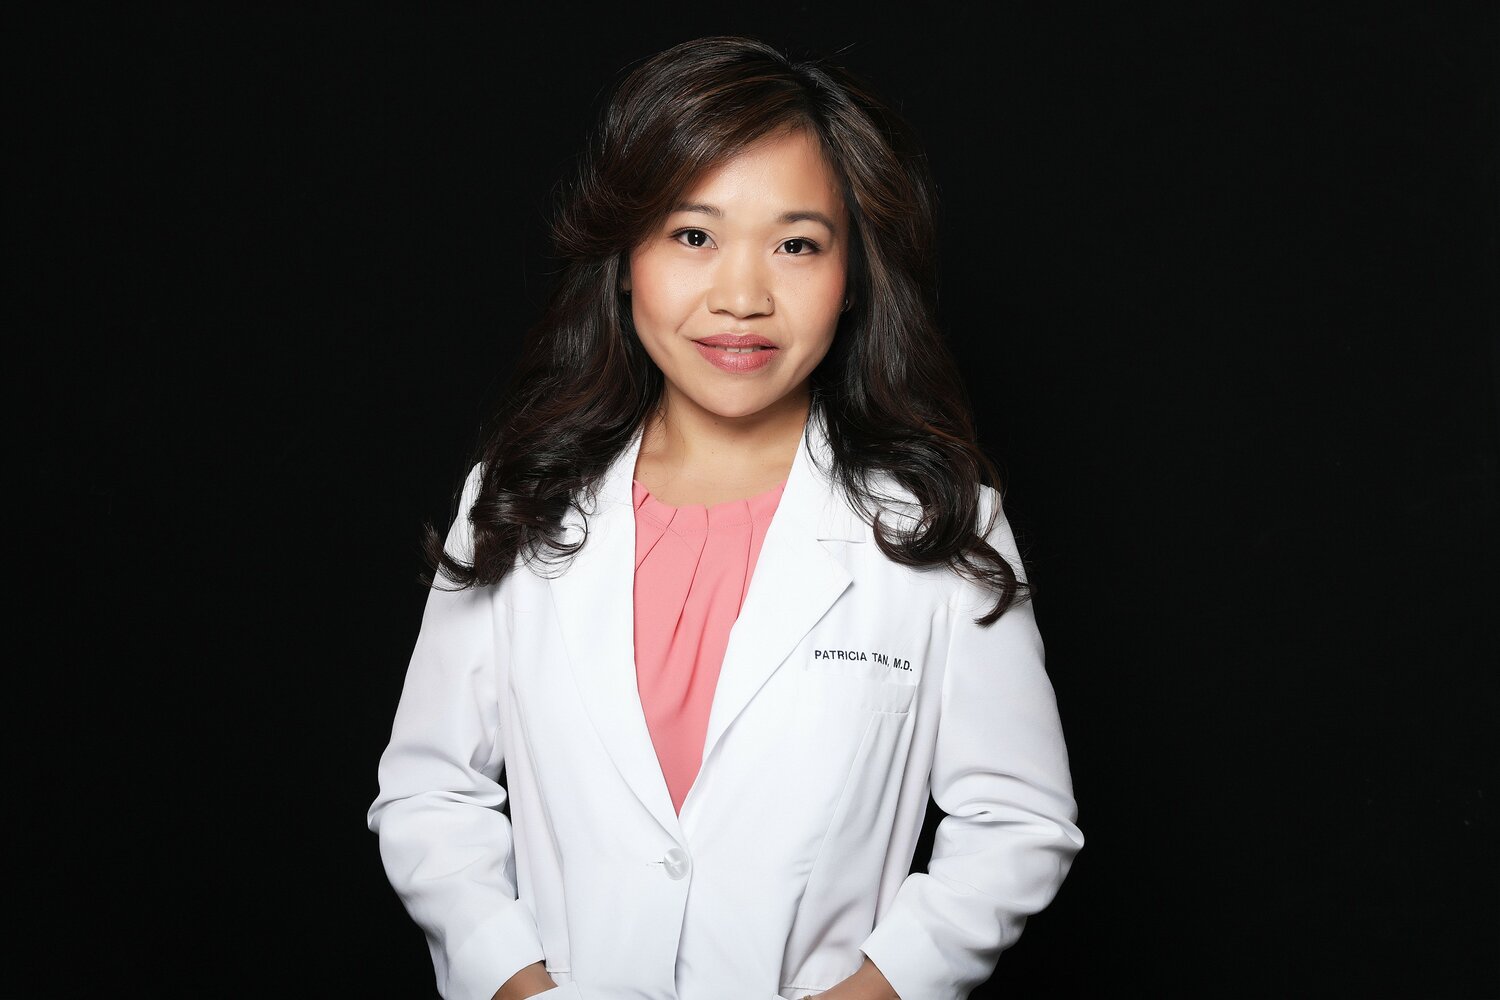 Dr. Patricia Tan, chief medical officer at UnitedHealthcare of Arizona